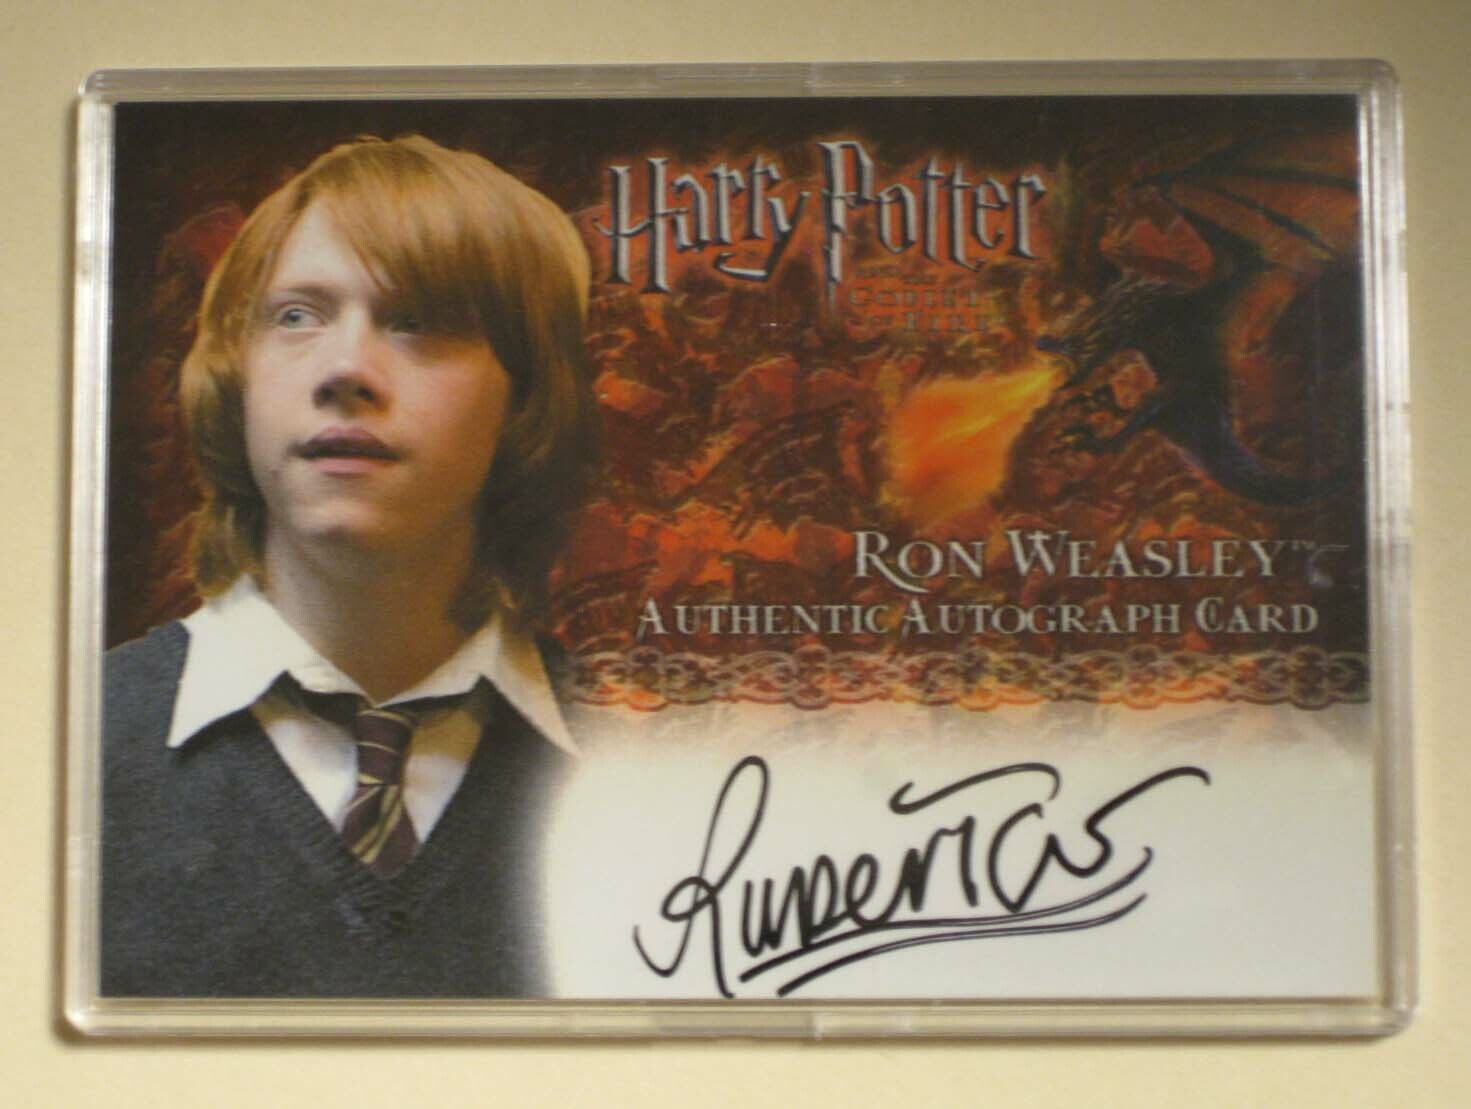 Ron Weasley - Harry Potter GoF Autograph card by Rupert Grint